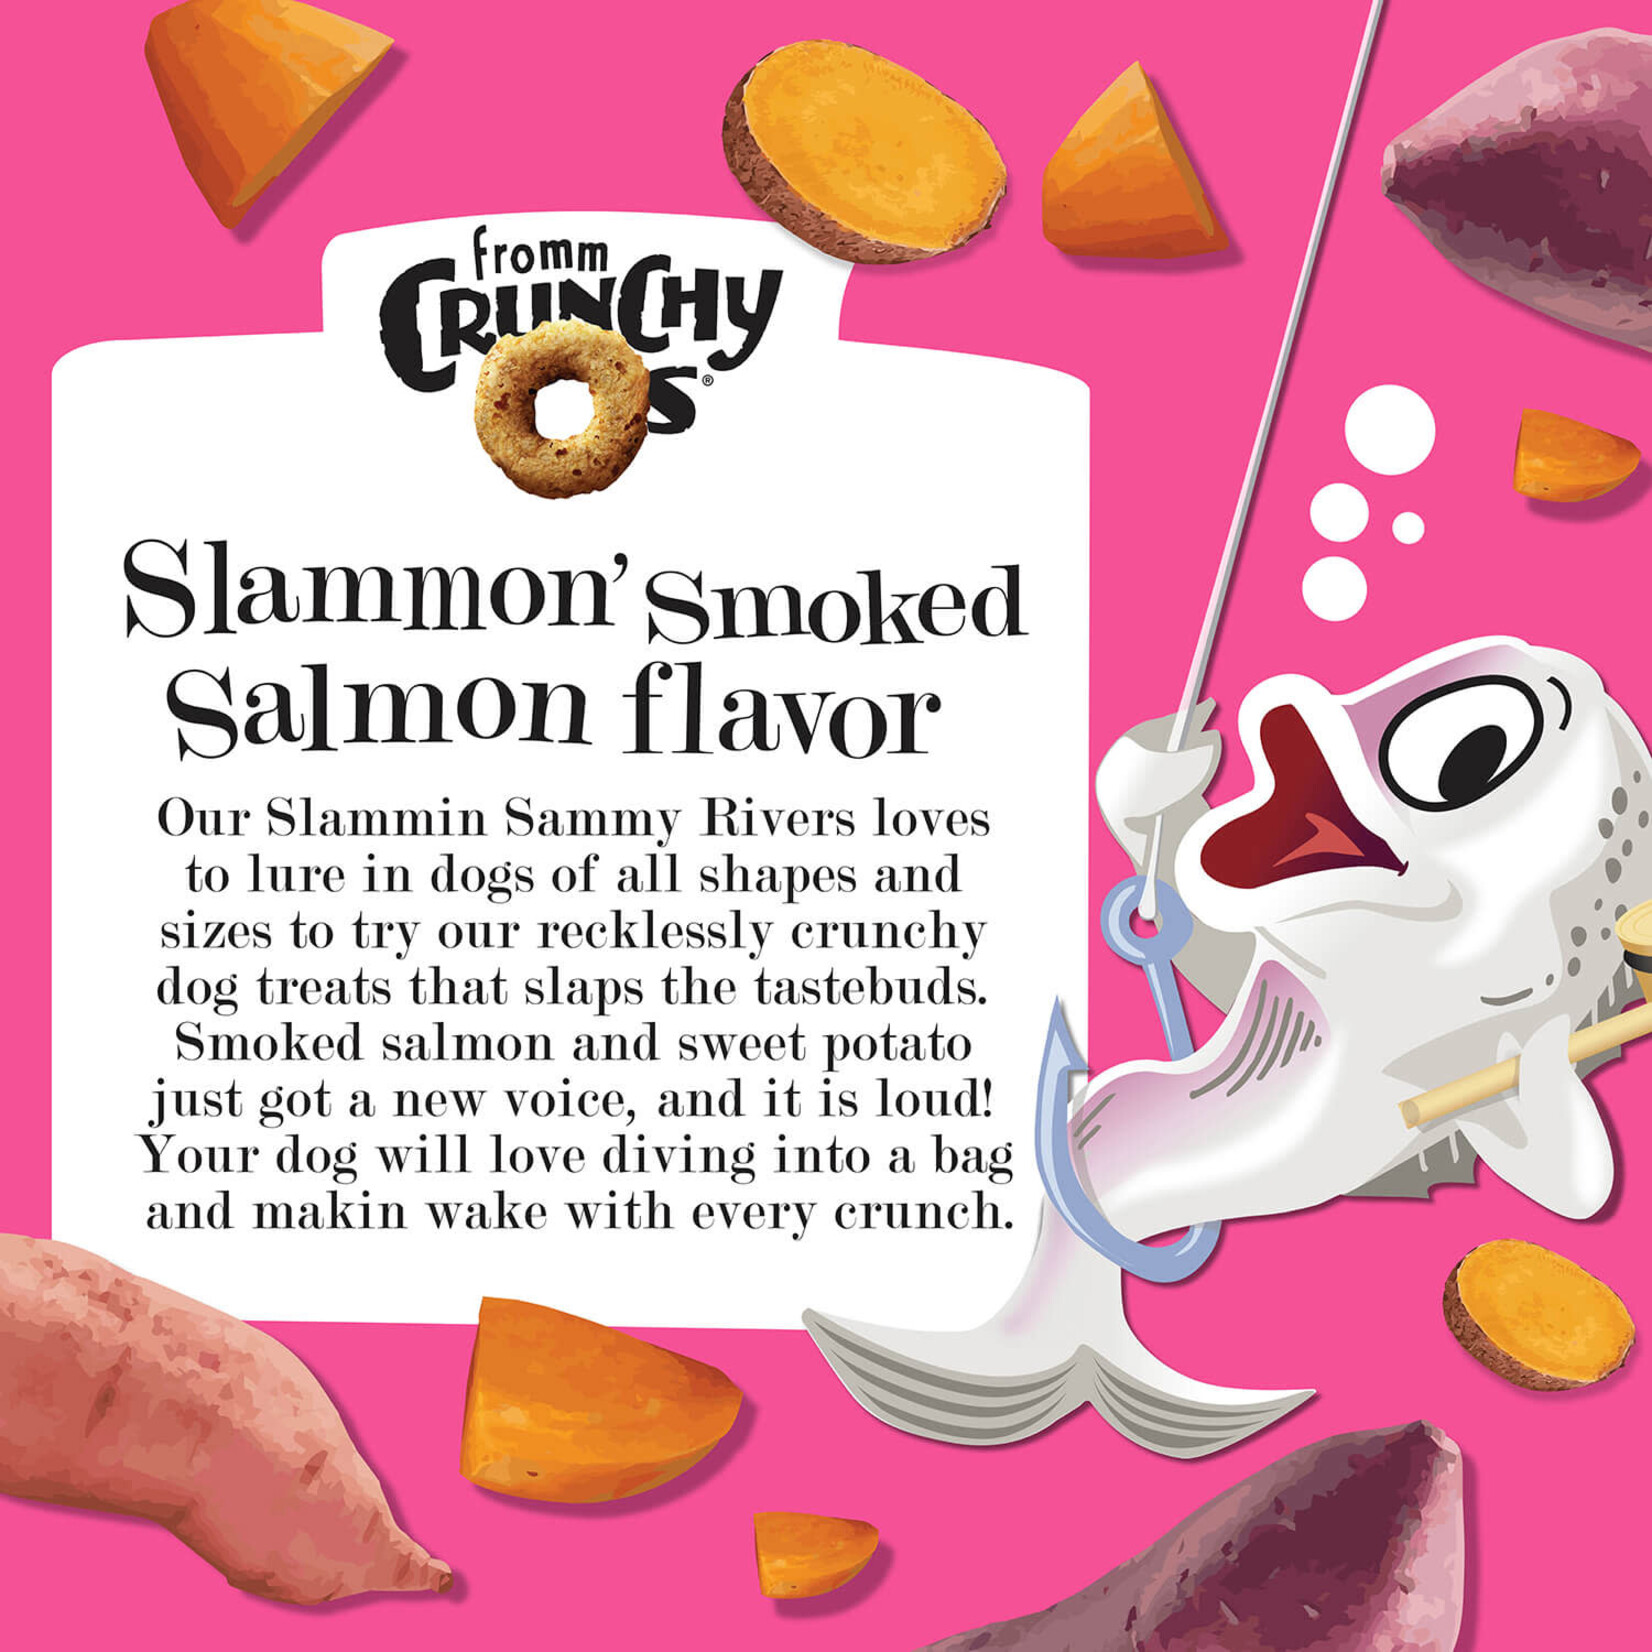 Fromm Crunchy Os Slammon' Smoked Salmon Flavor Dog Treats